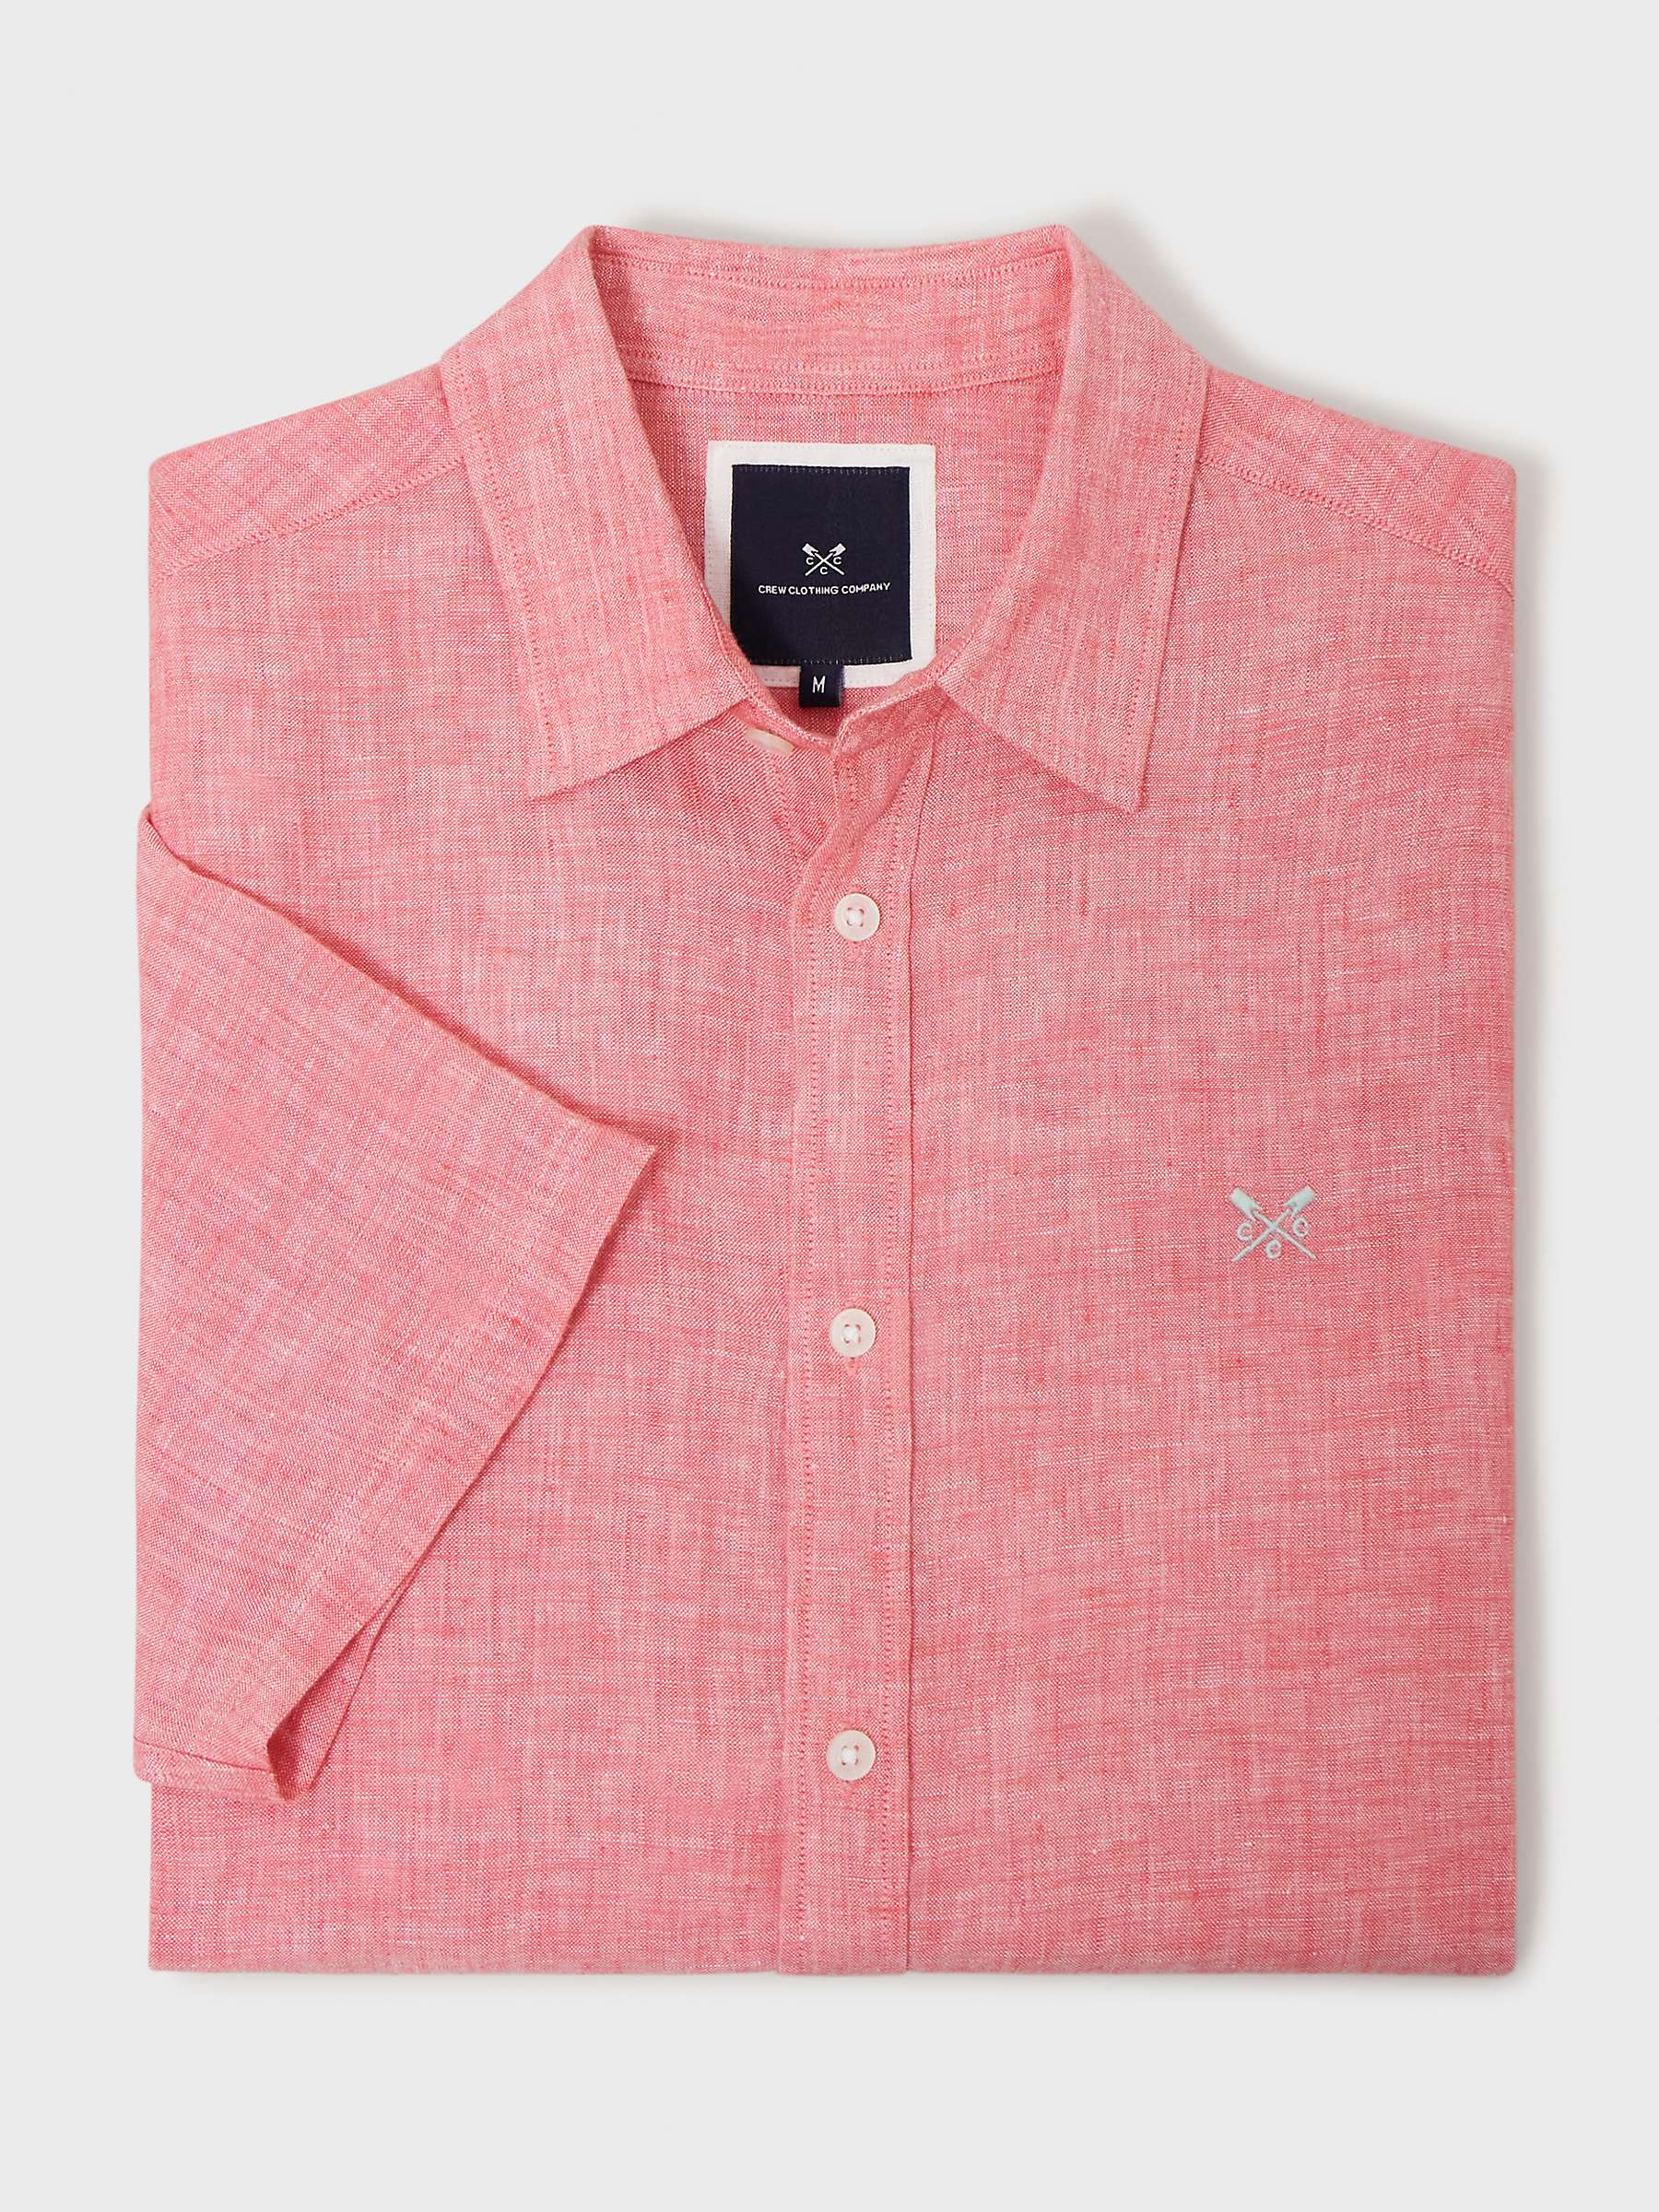 Crew Clothing Linen Short Sleeve Shirt, Coral Pink at John Lewis & Partners